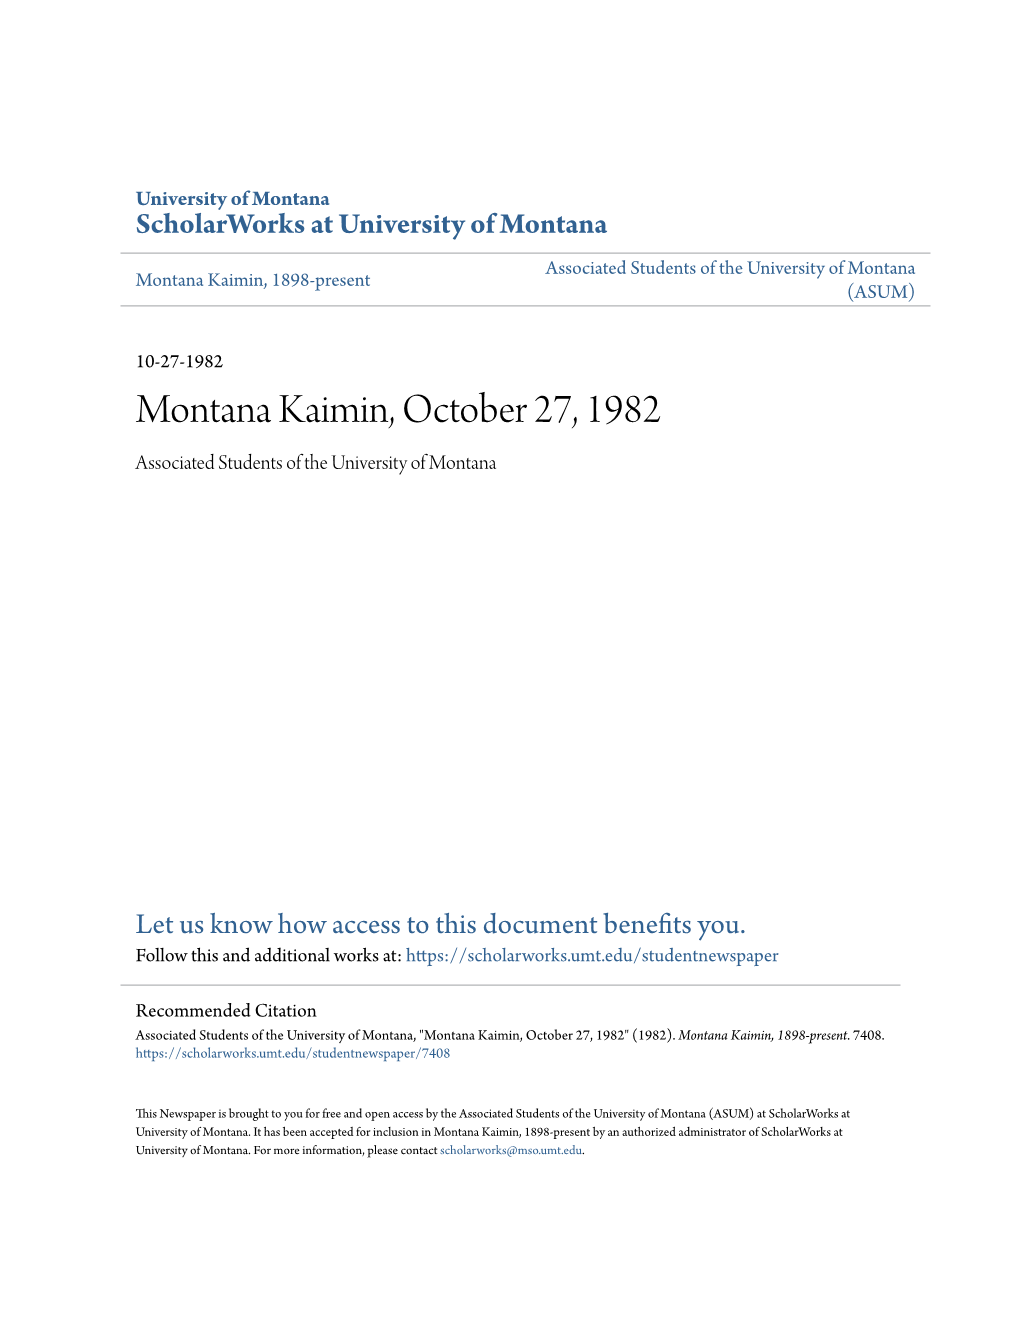 Montana Kaimin, October 27, 1982 Associated Students of the University of Montana